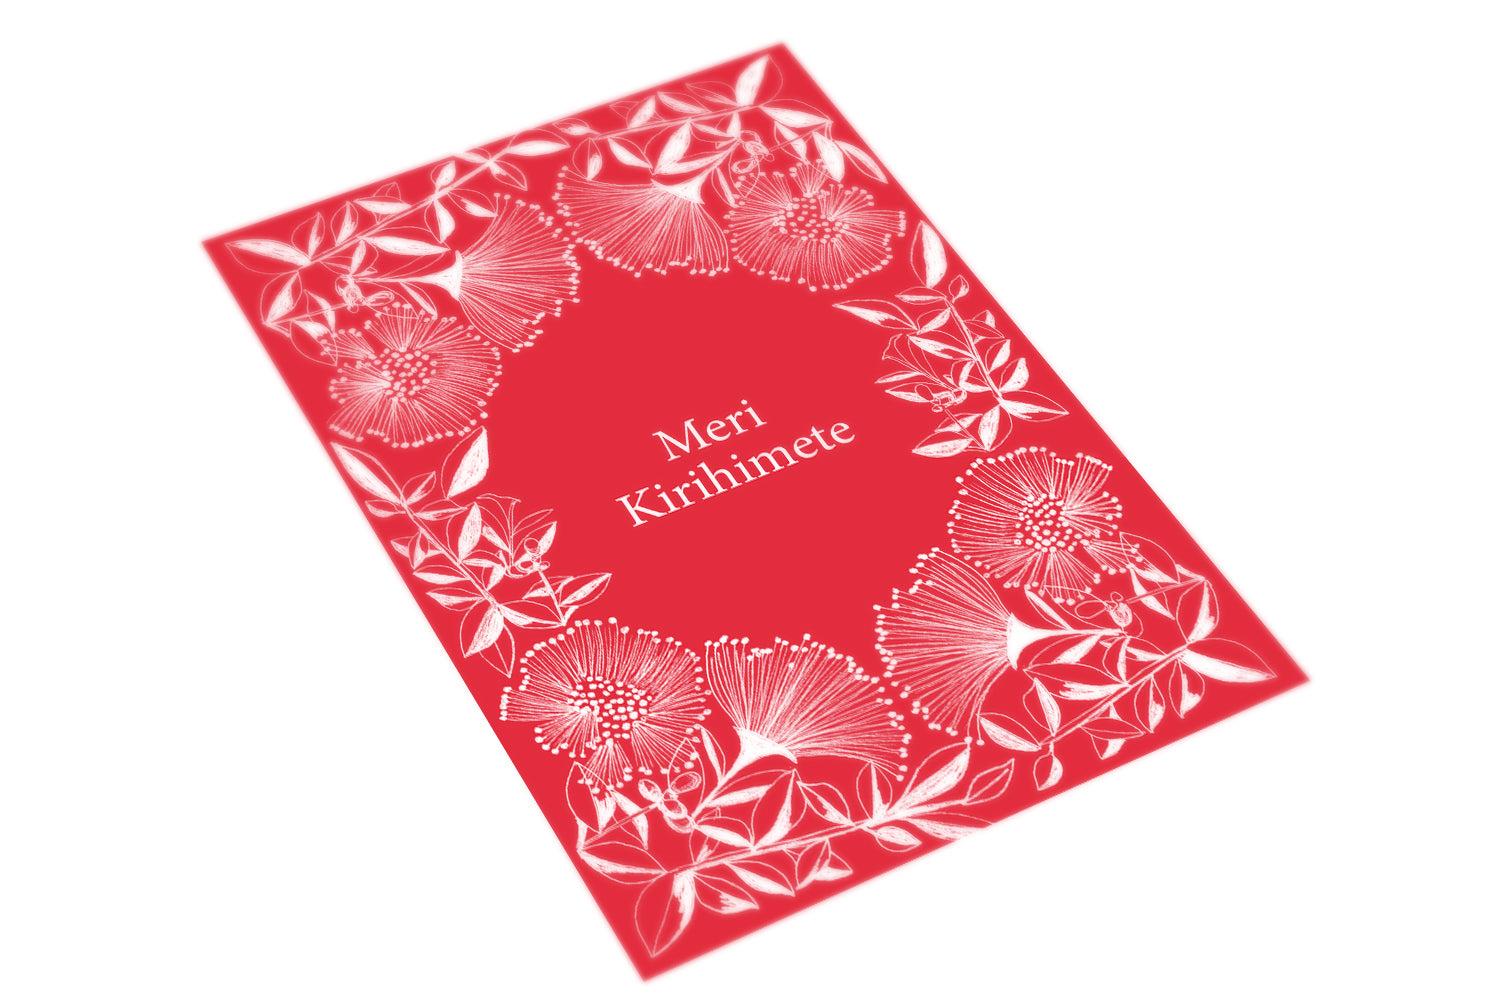 Meri Kirihimete - The Paper People Greeting Cards